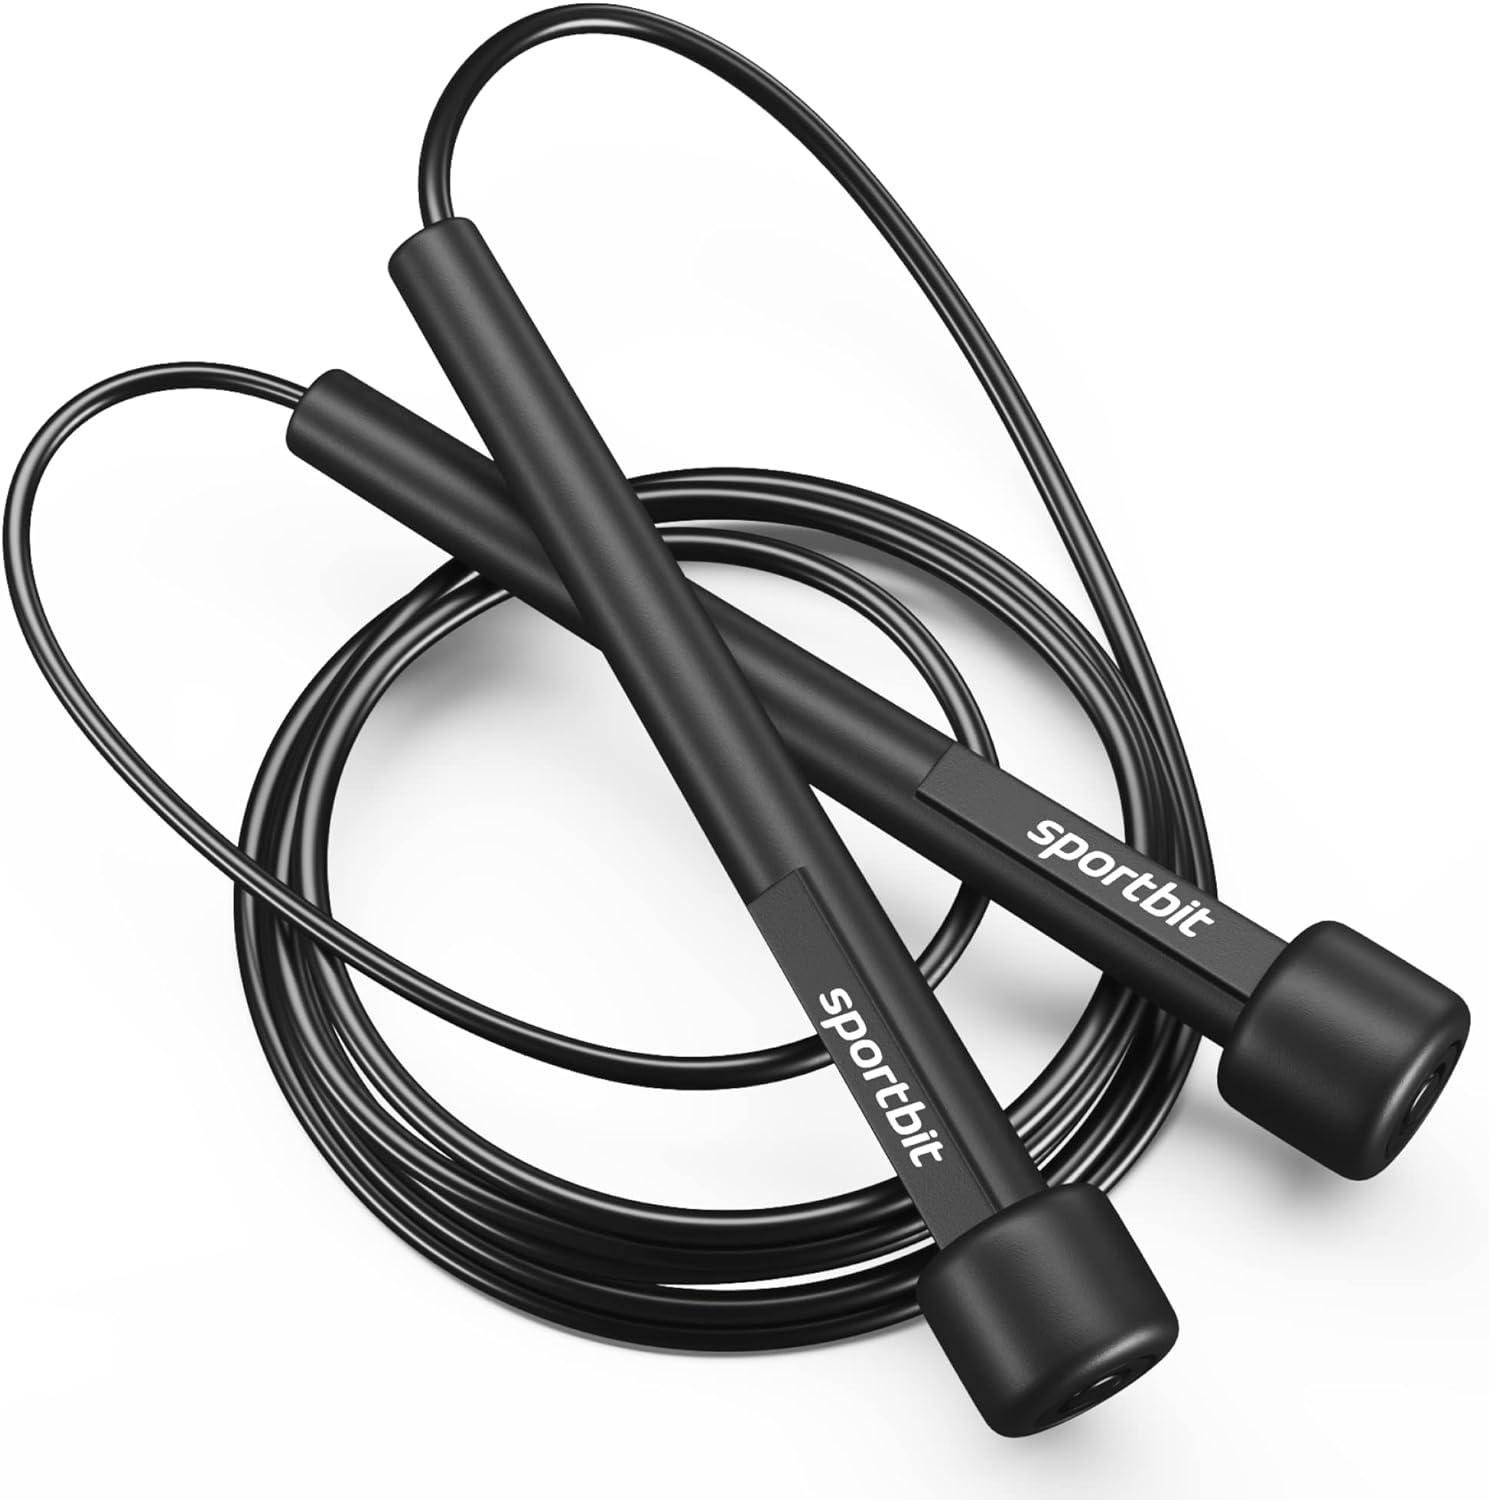 sportbit adjustable jump rope for speed skipping ?43551-137233 sportbit b07g2dfzzg